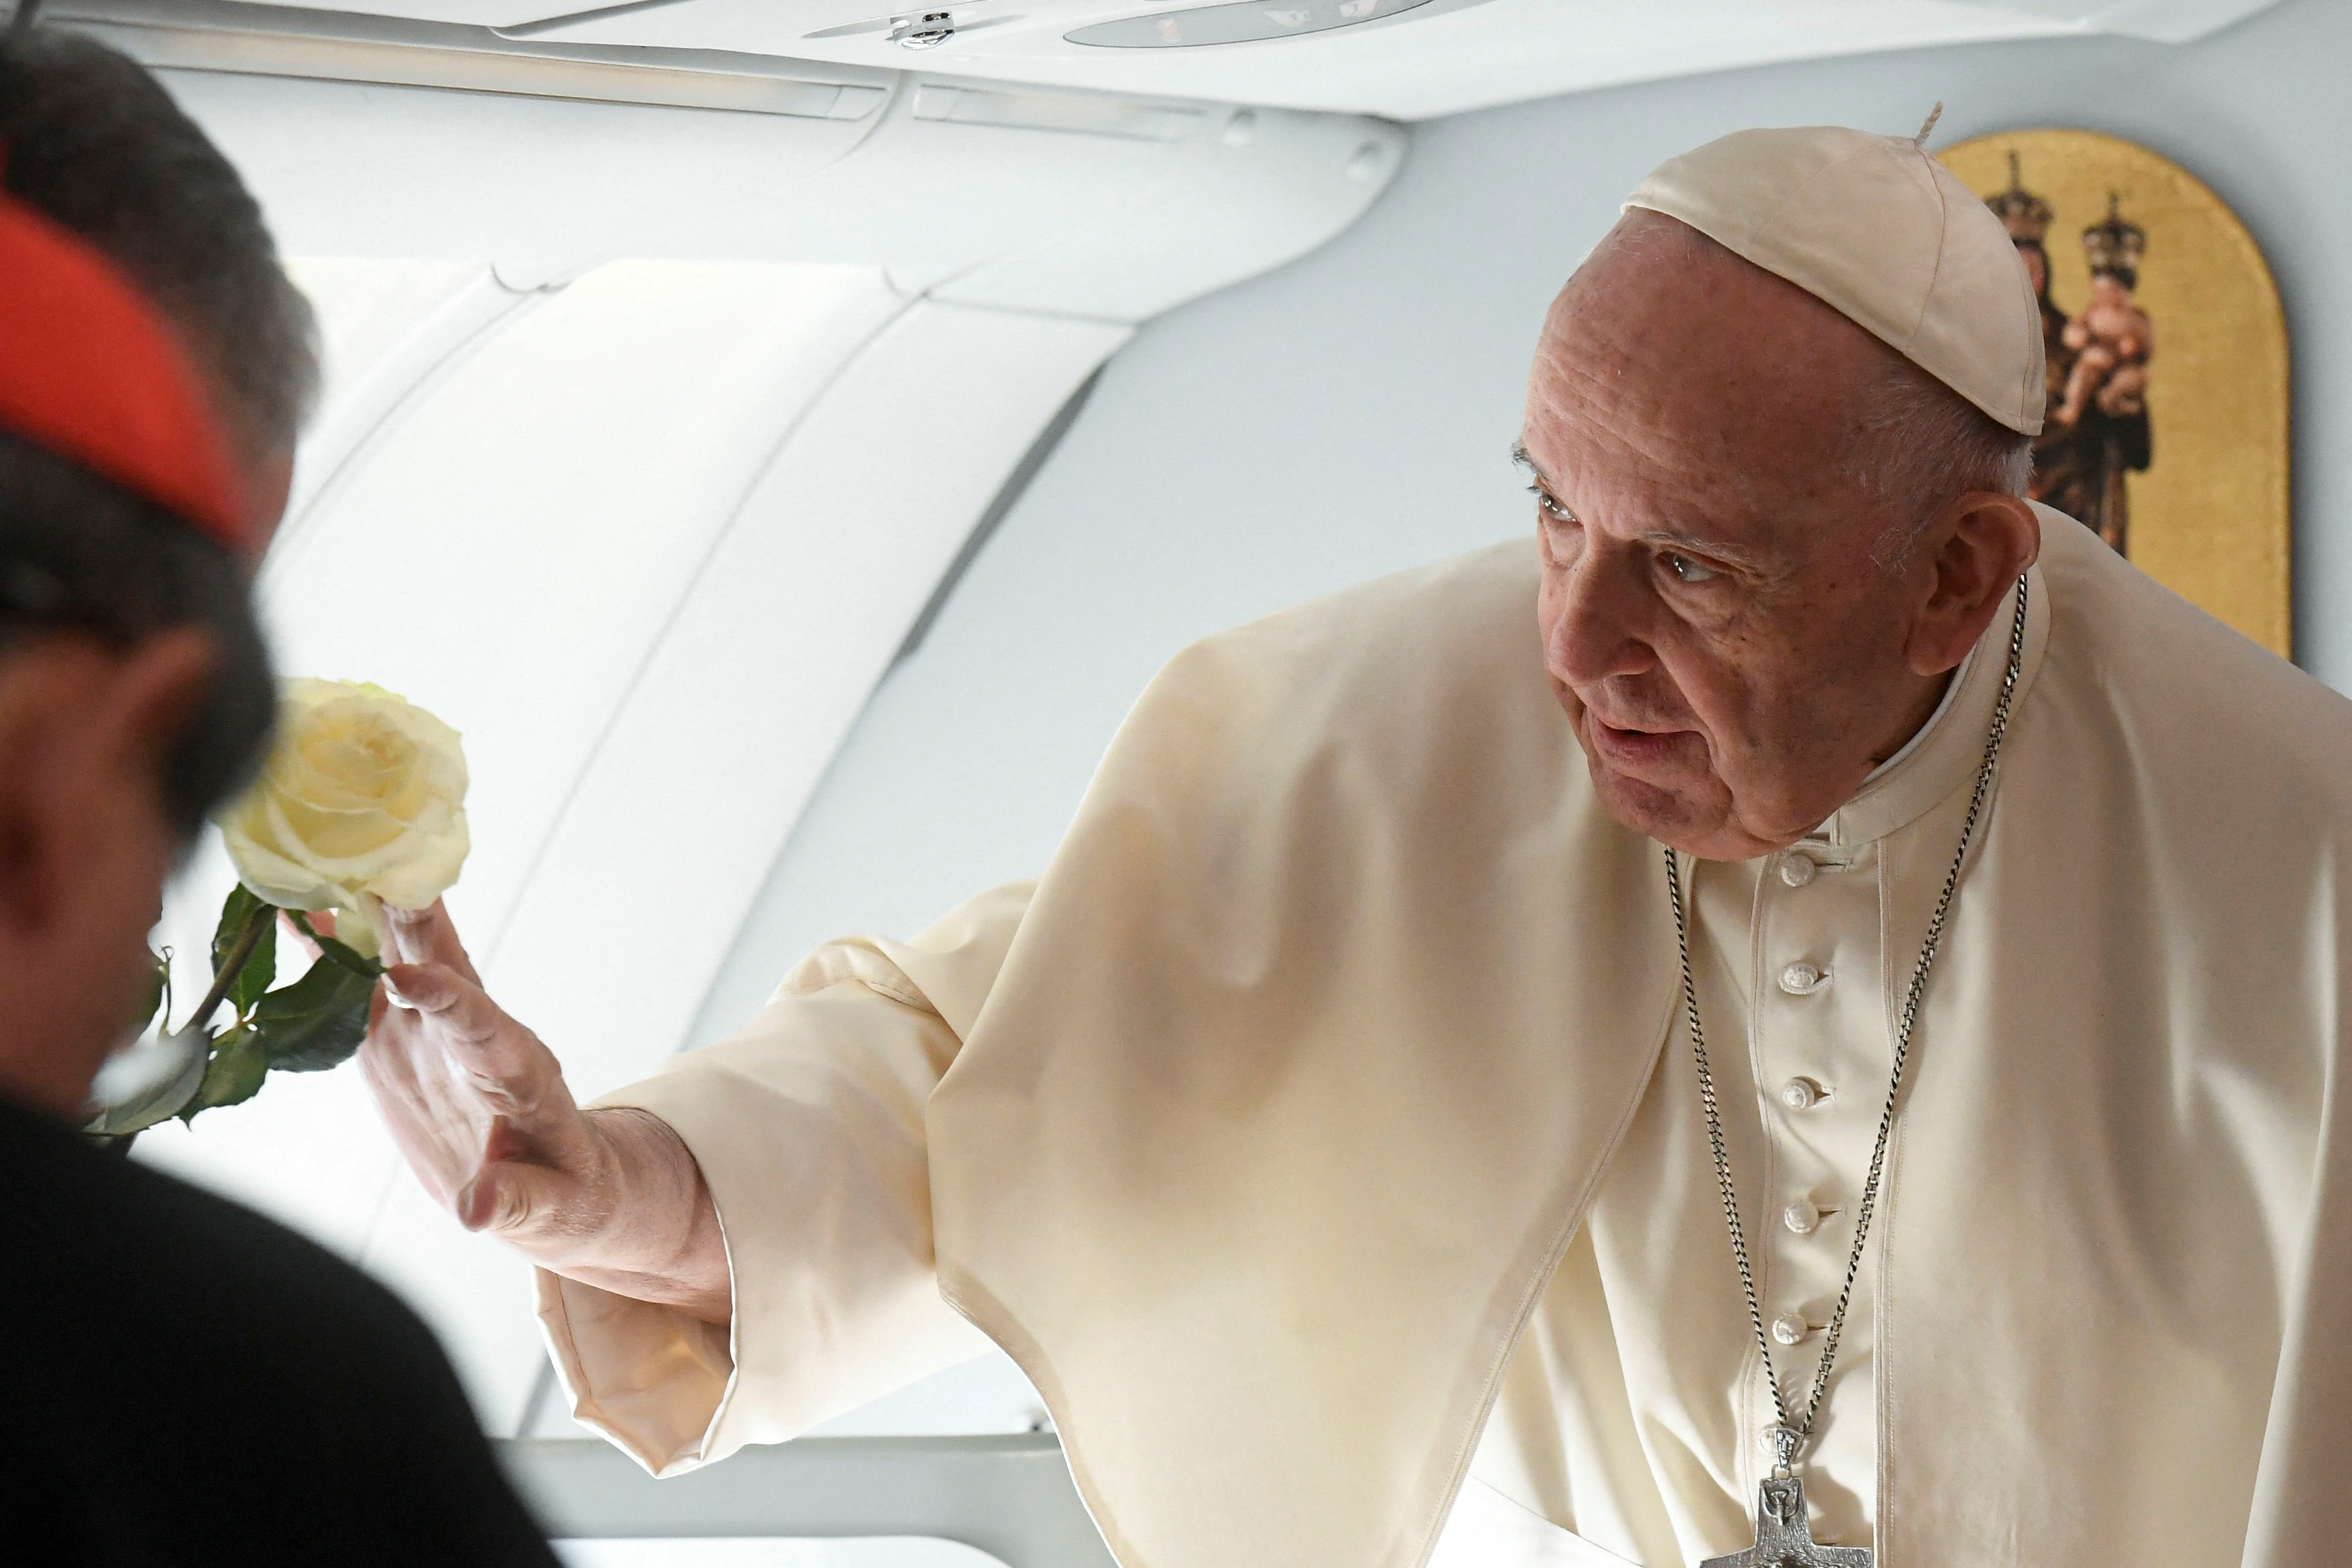 Pope Francis visits Kazakhstan